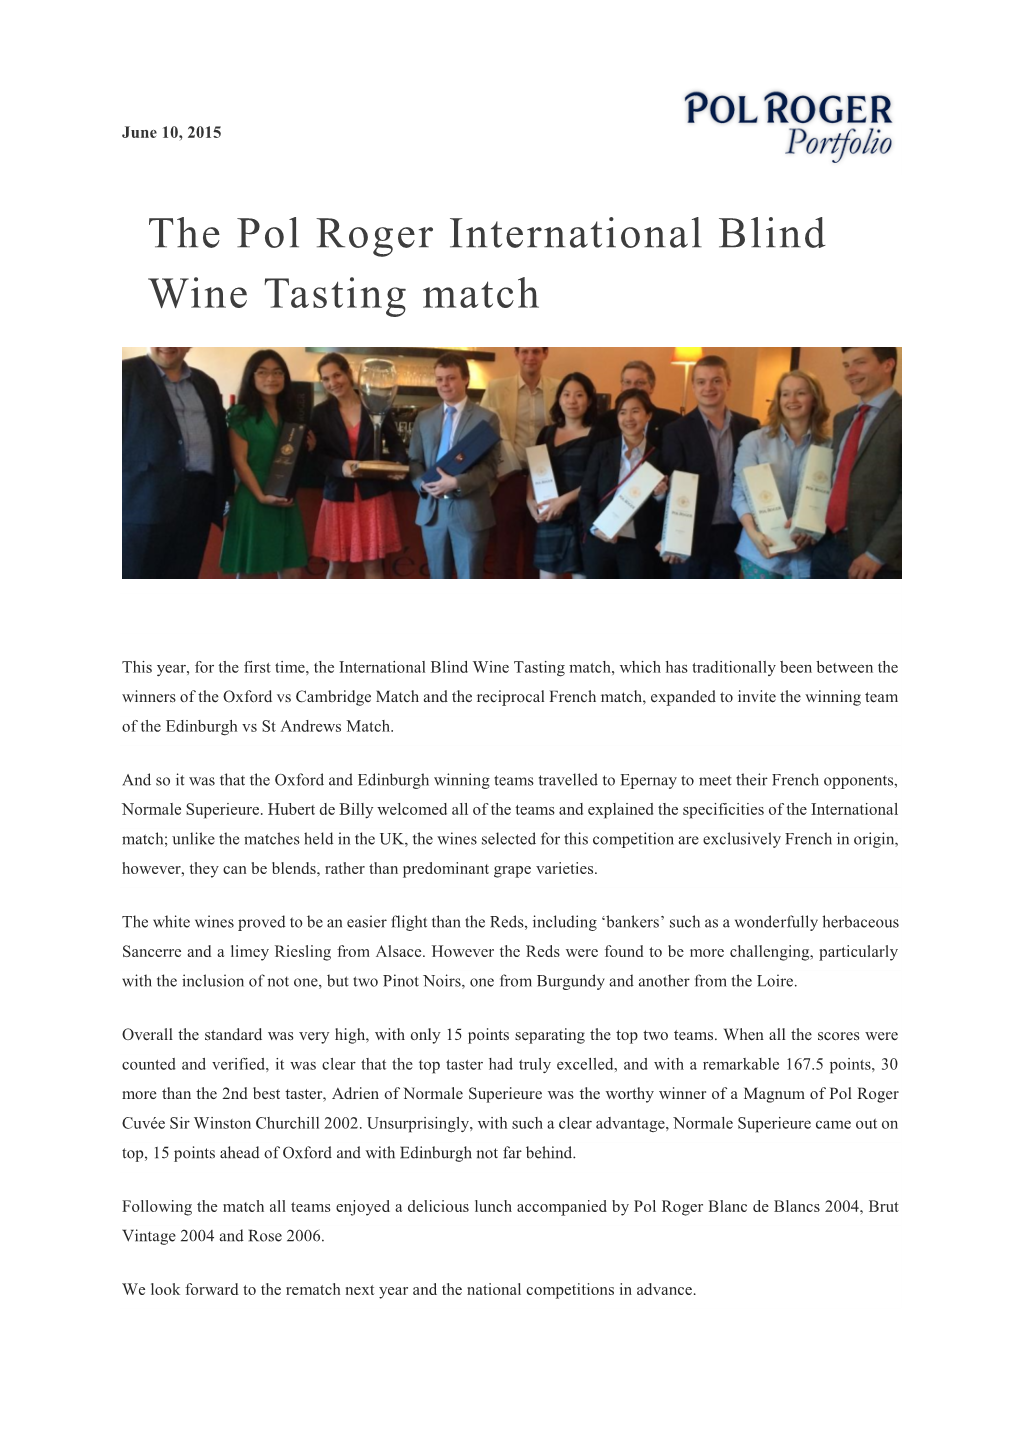 The Pol Roger International Blind Wine Tasting Match